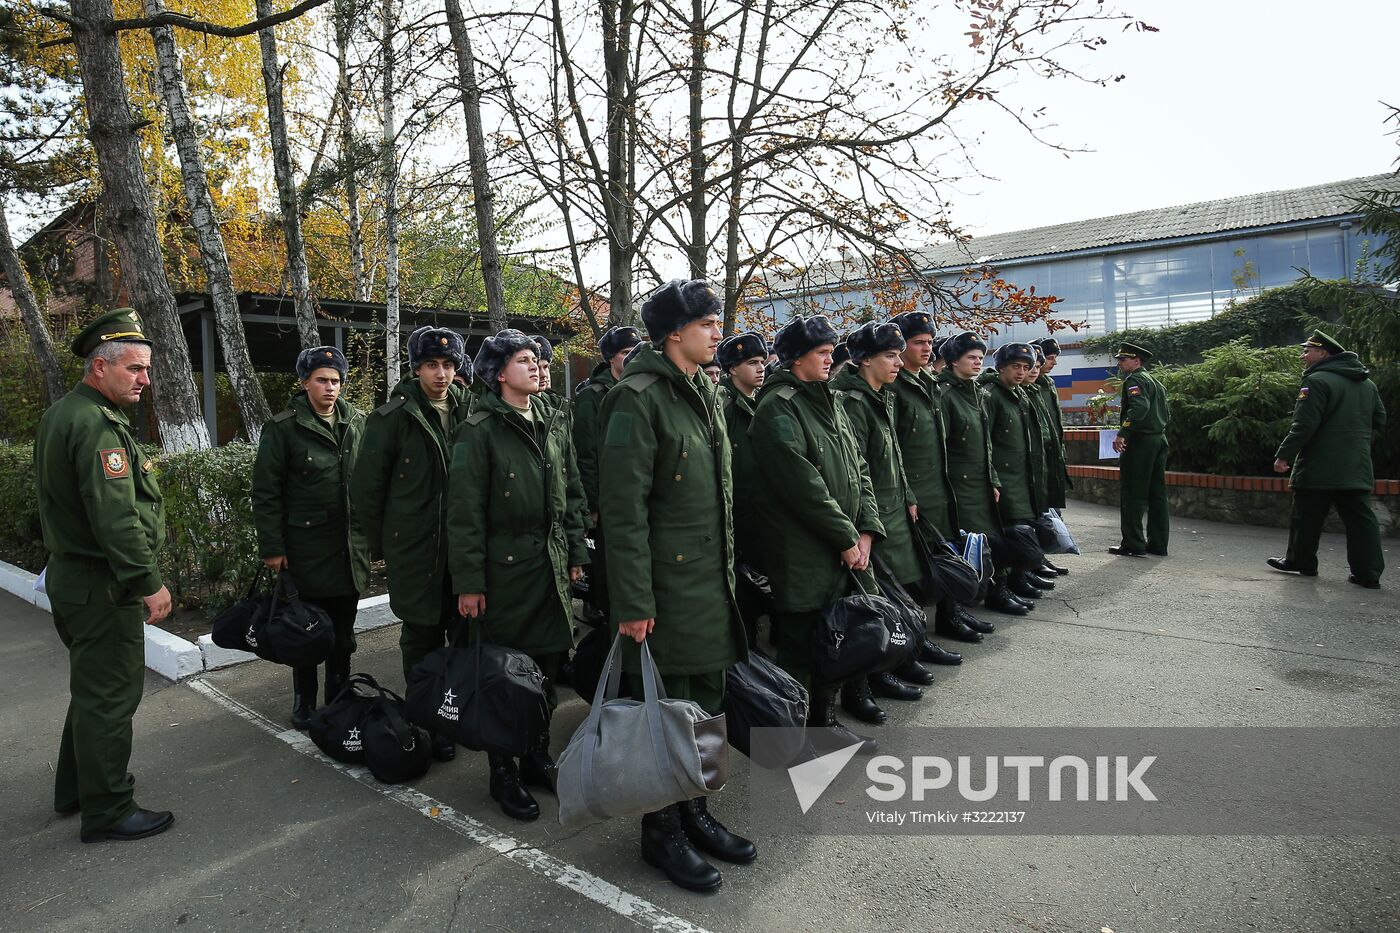 Autumn conscription in Krasnodar